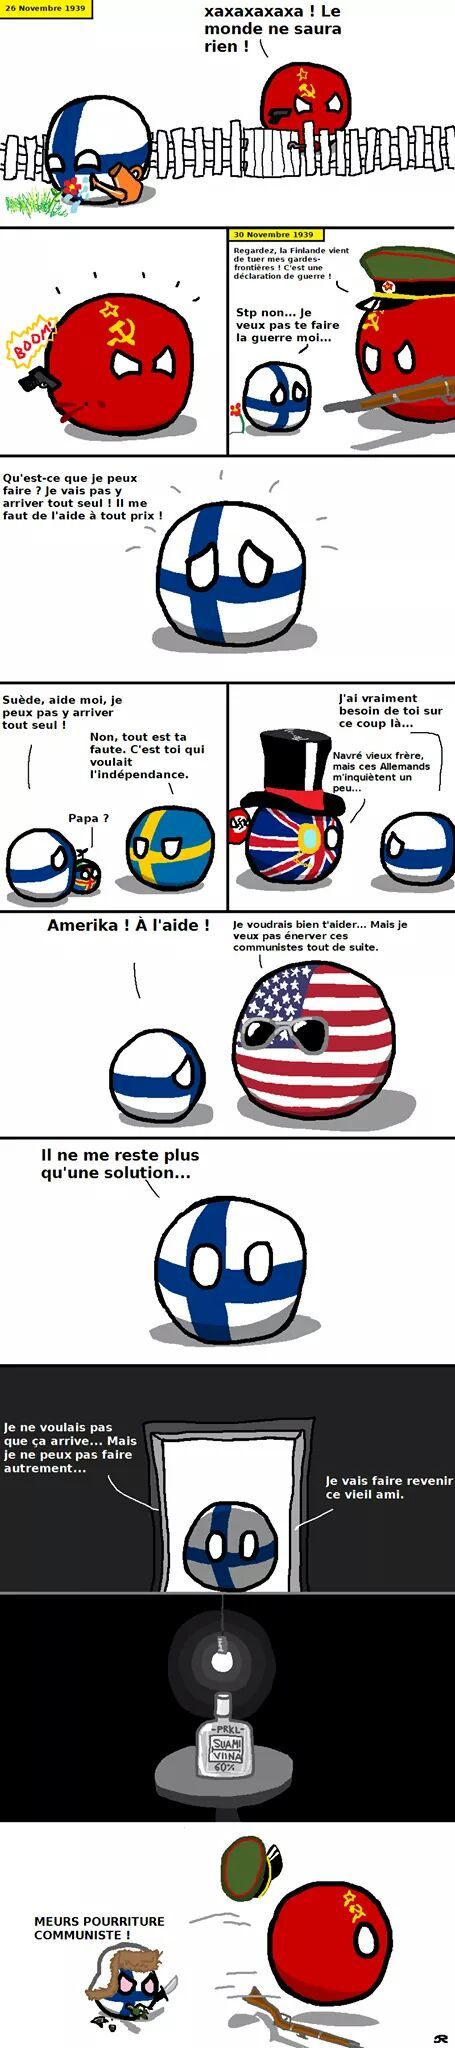 Finlandball Powa' ! - meme